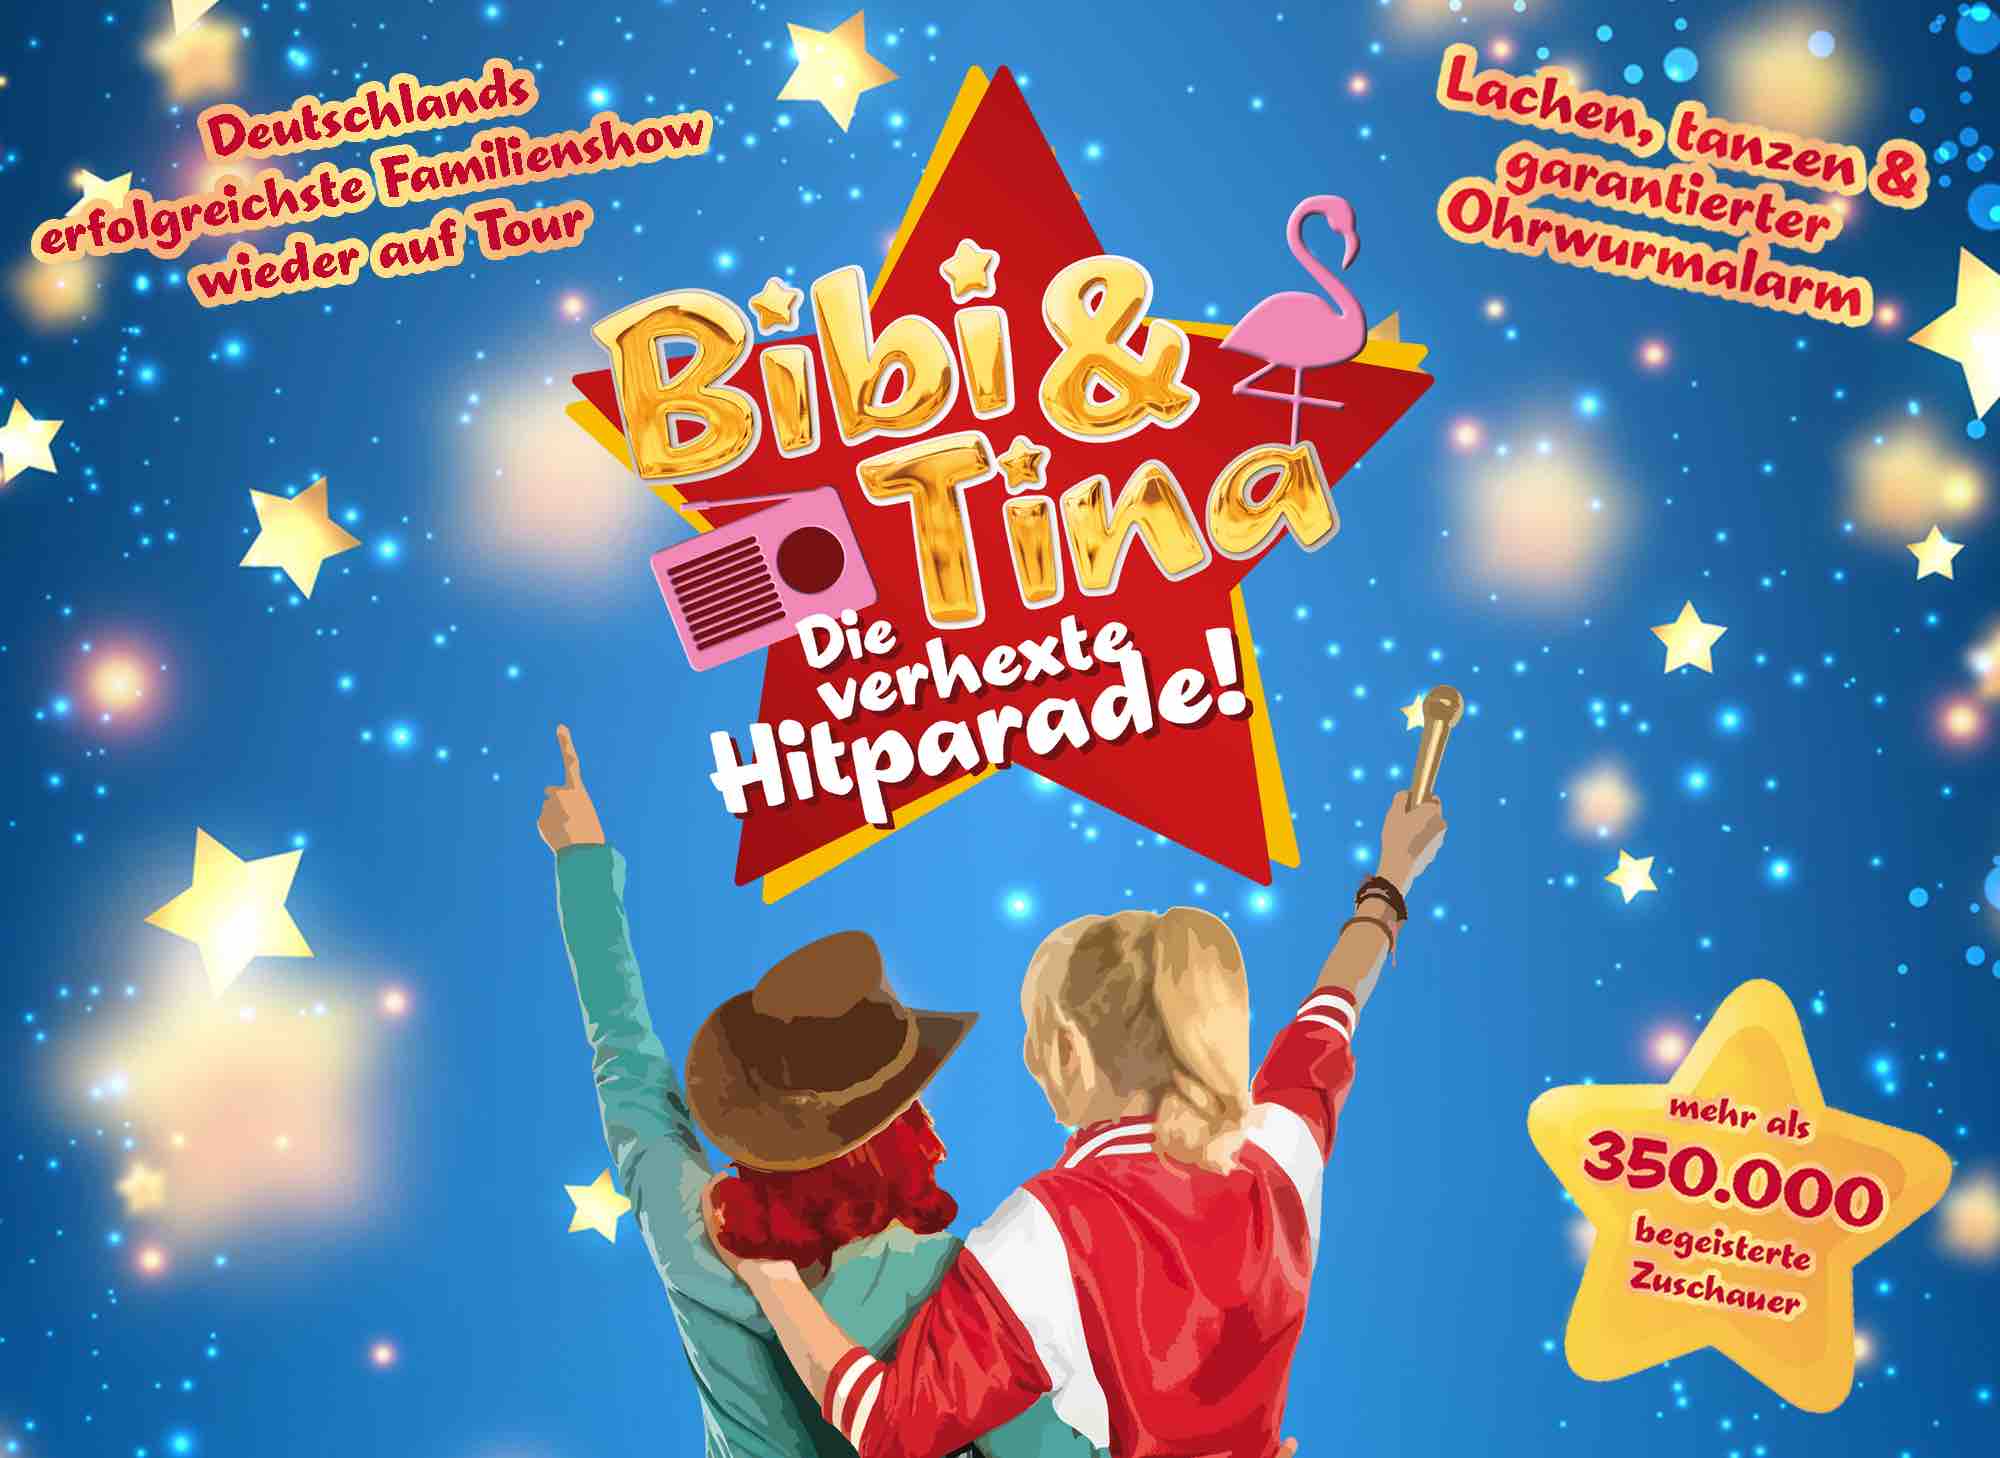 Deutsche-Politik-News.de | Bibi & Tina - Die verhexte Hitparade / Pressefoto